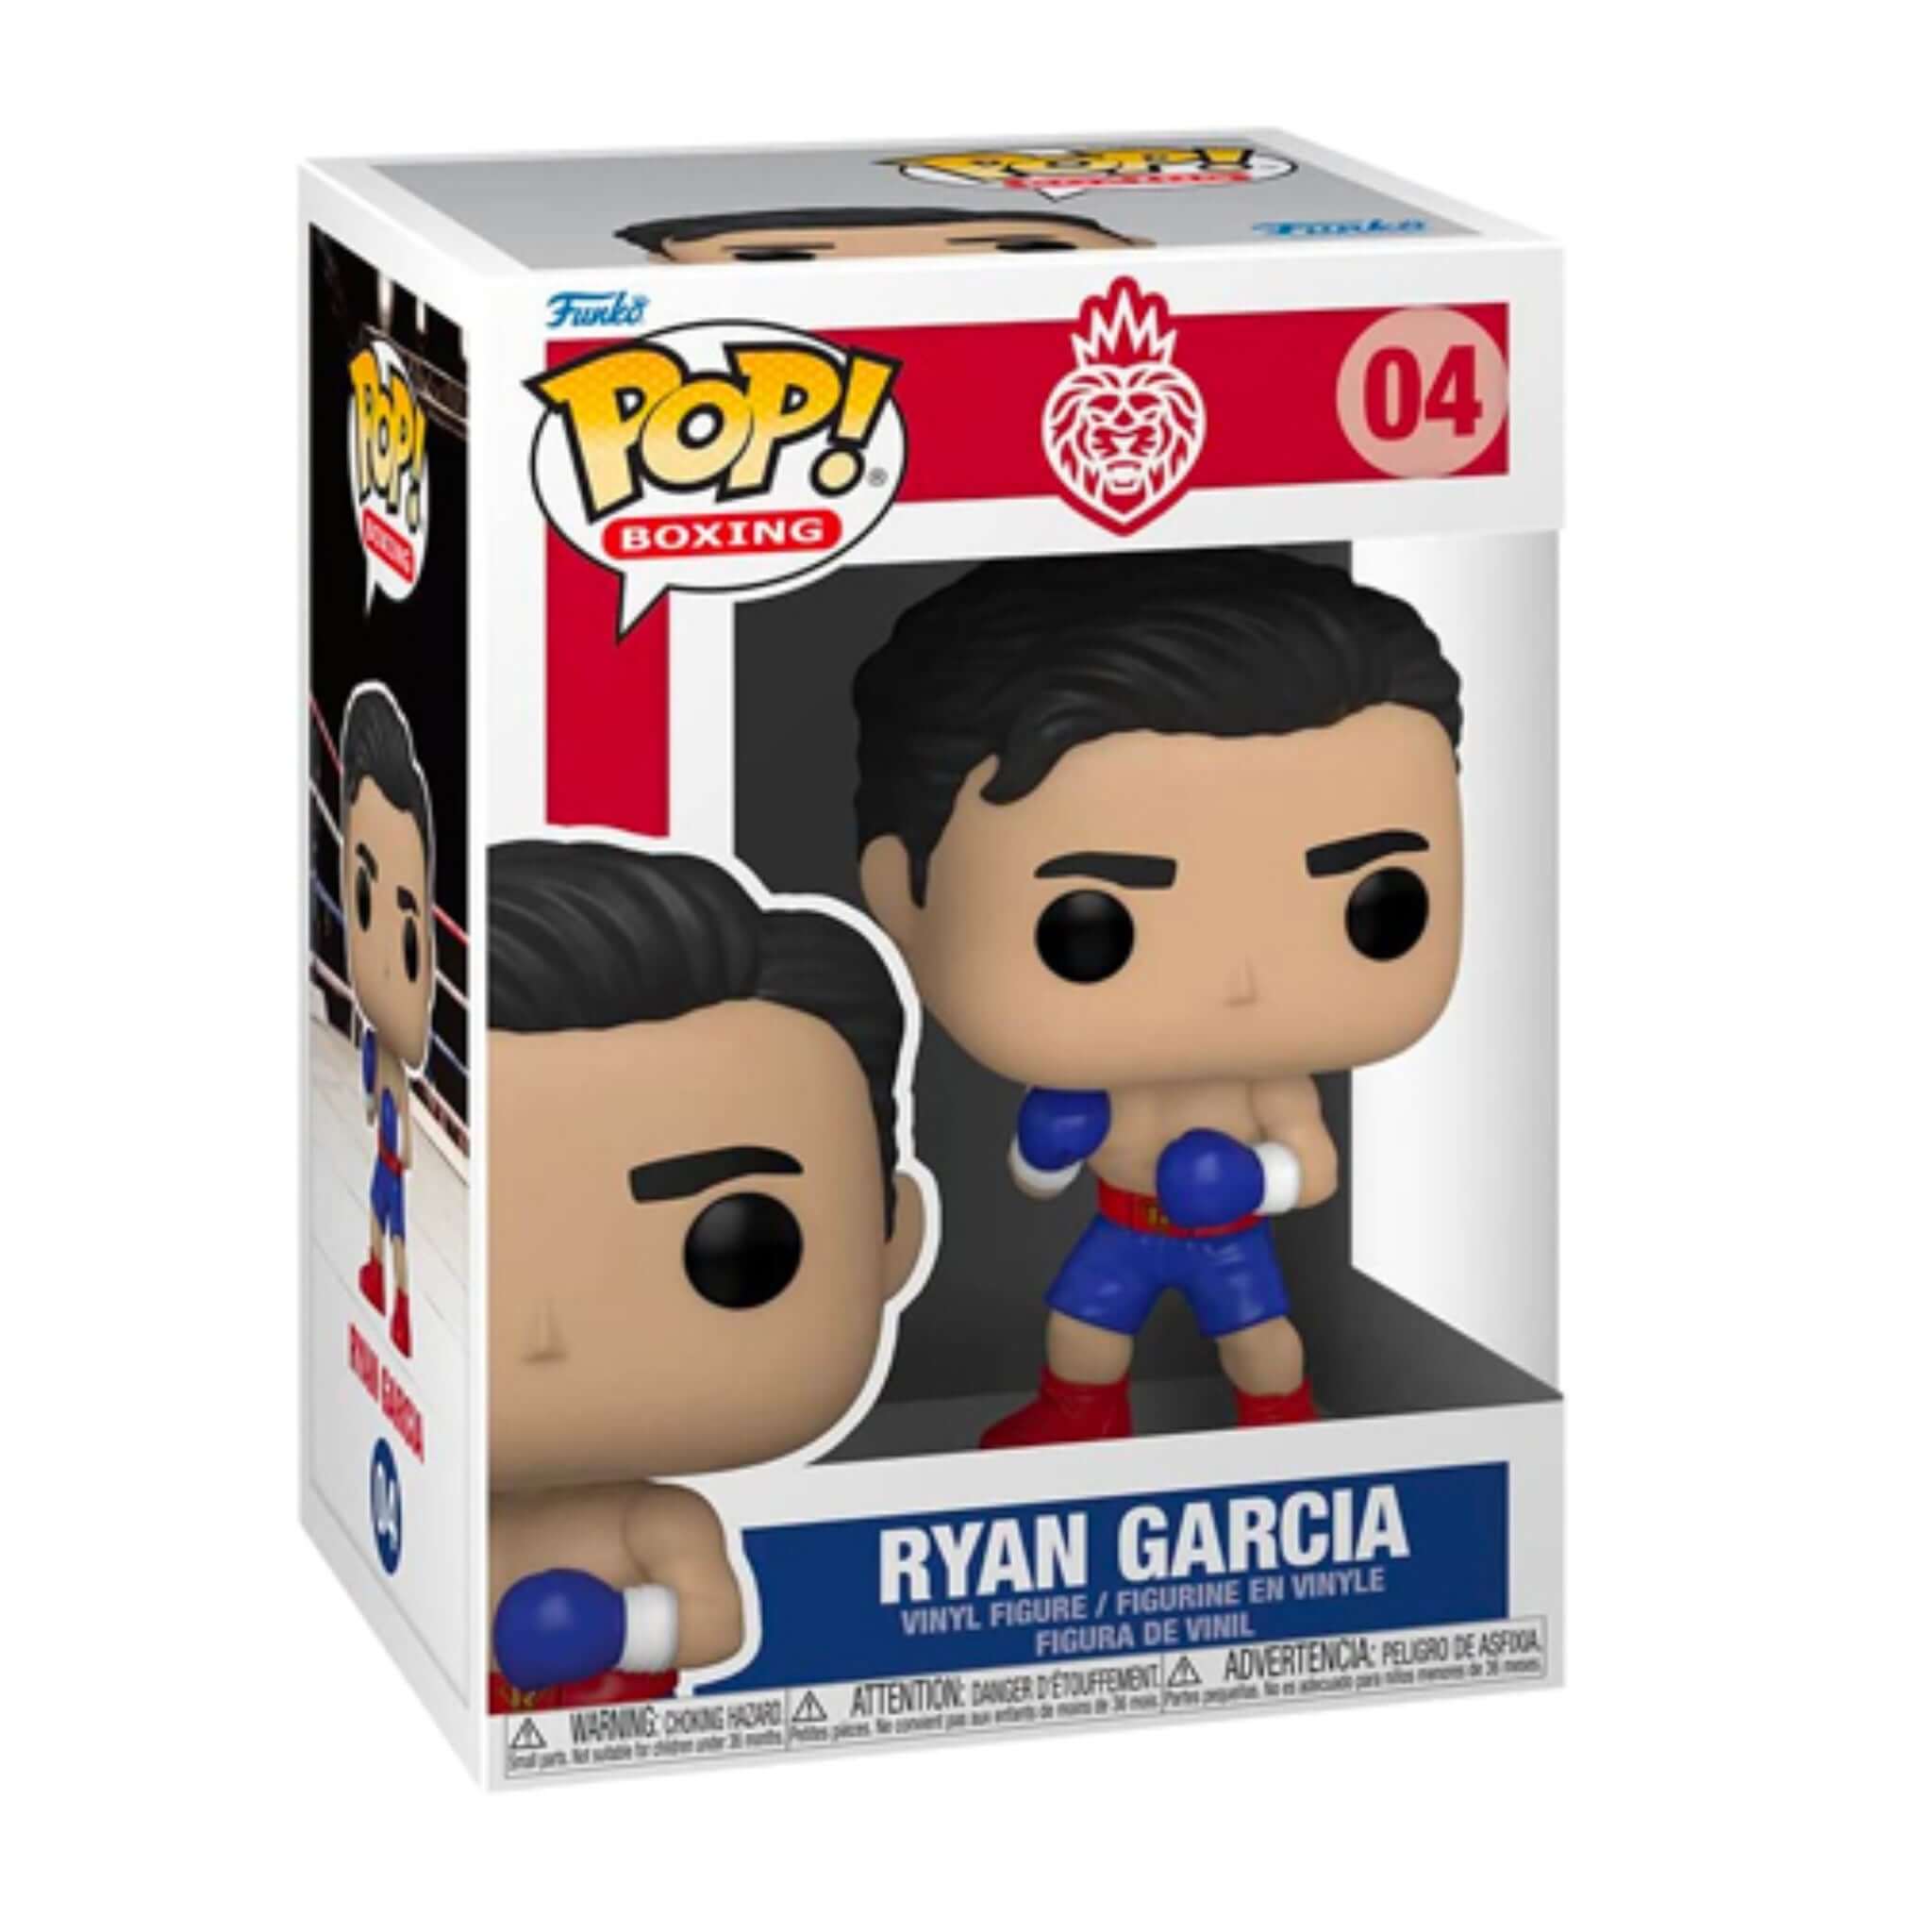 Ryan Garcia Funko Pop!-Jingle Truck Toys